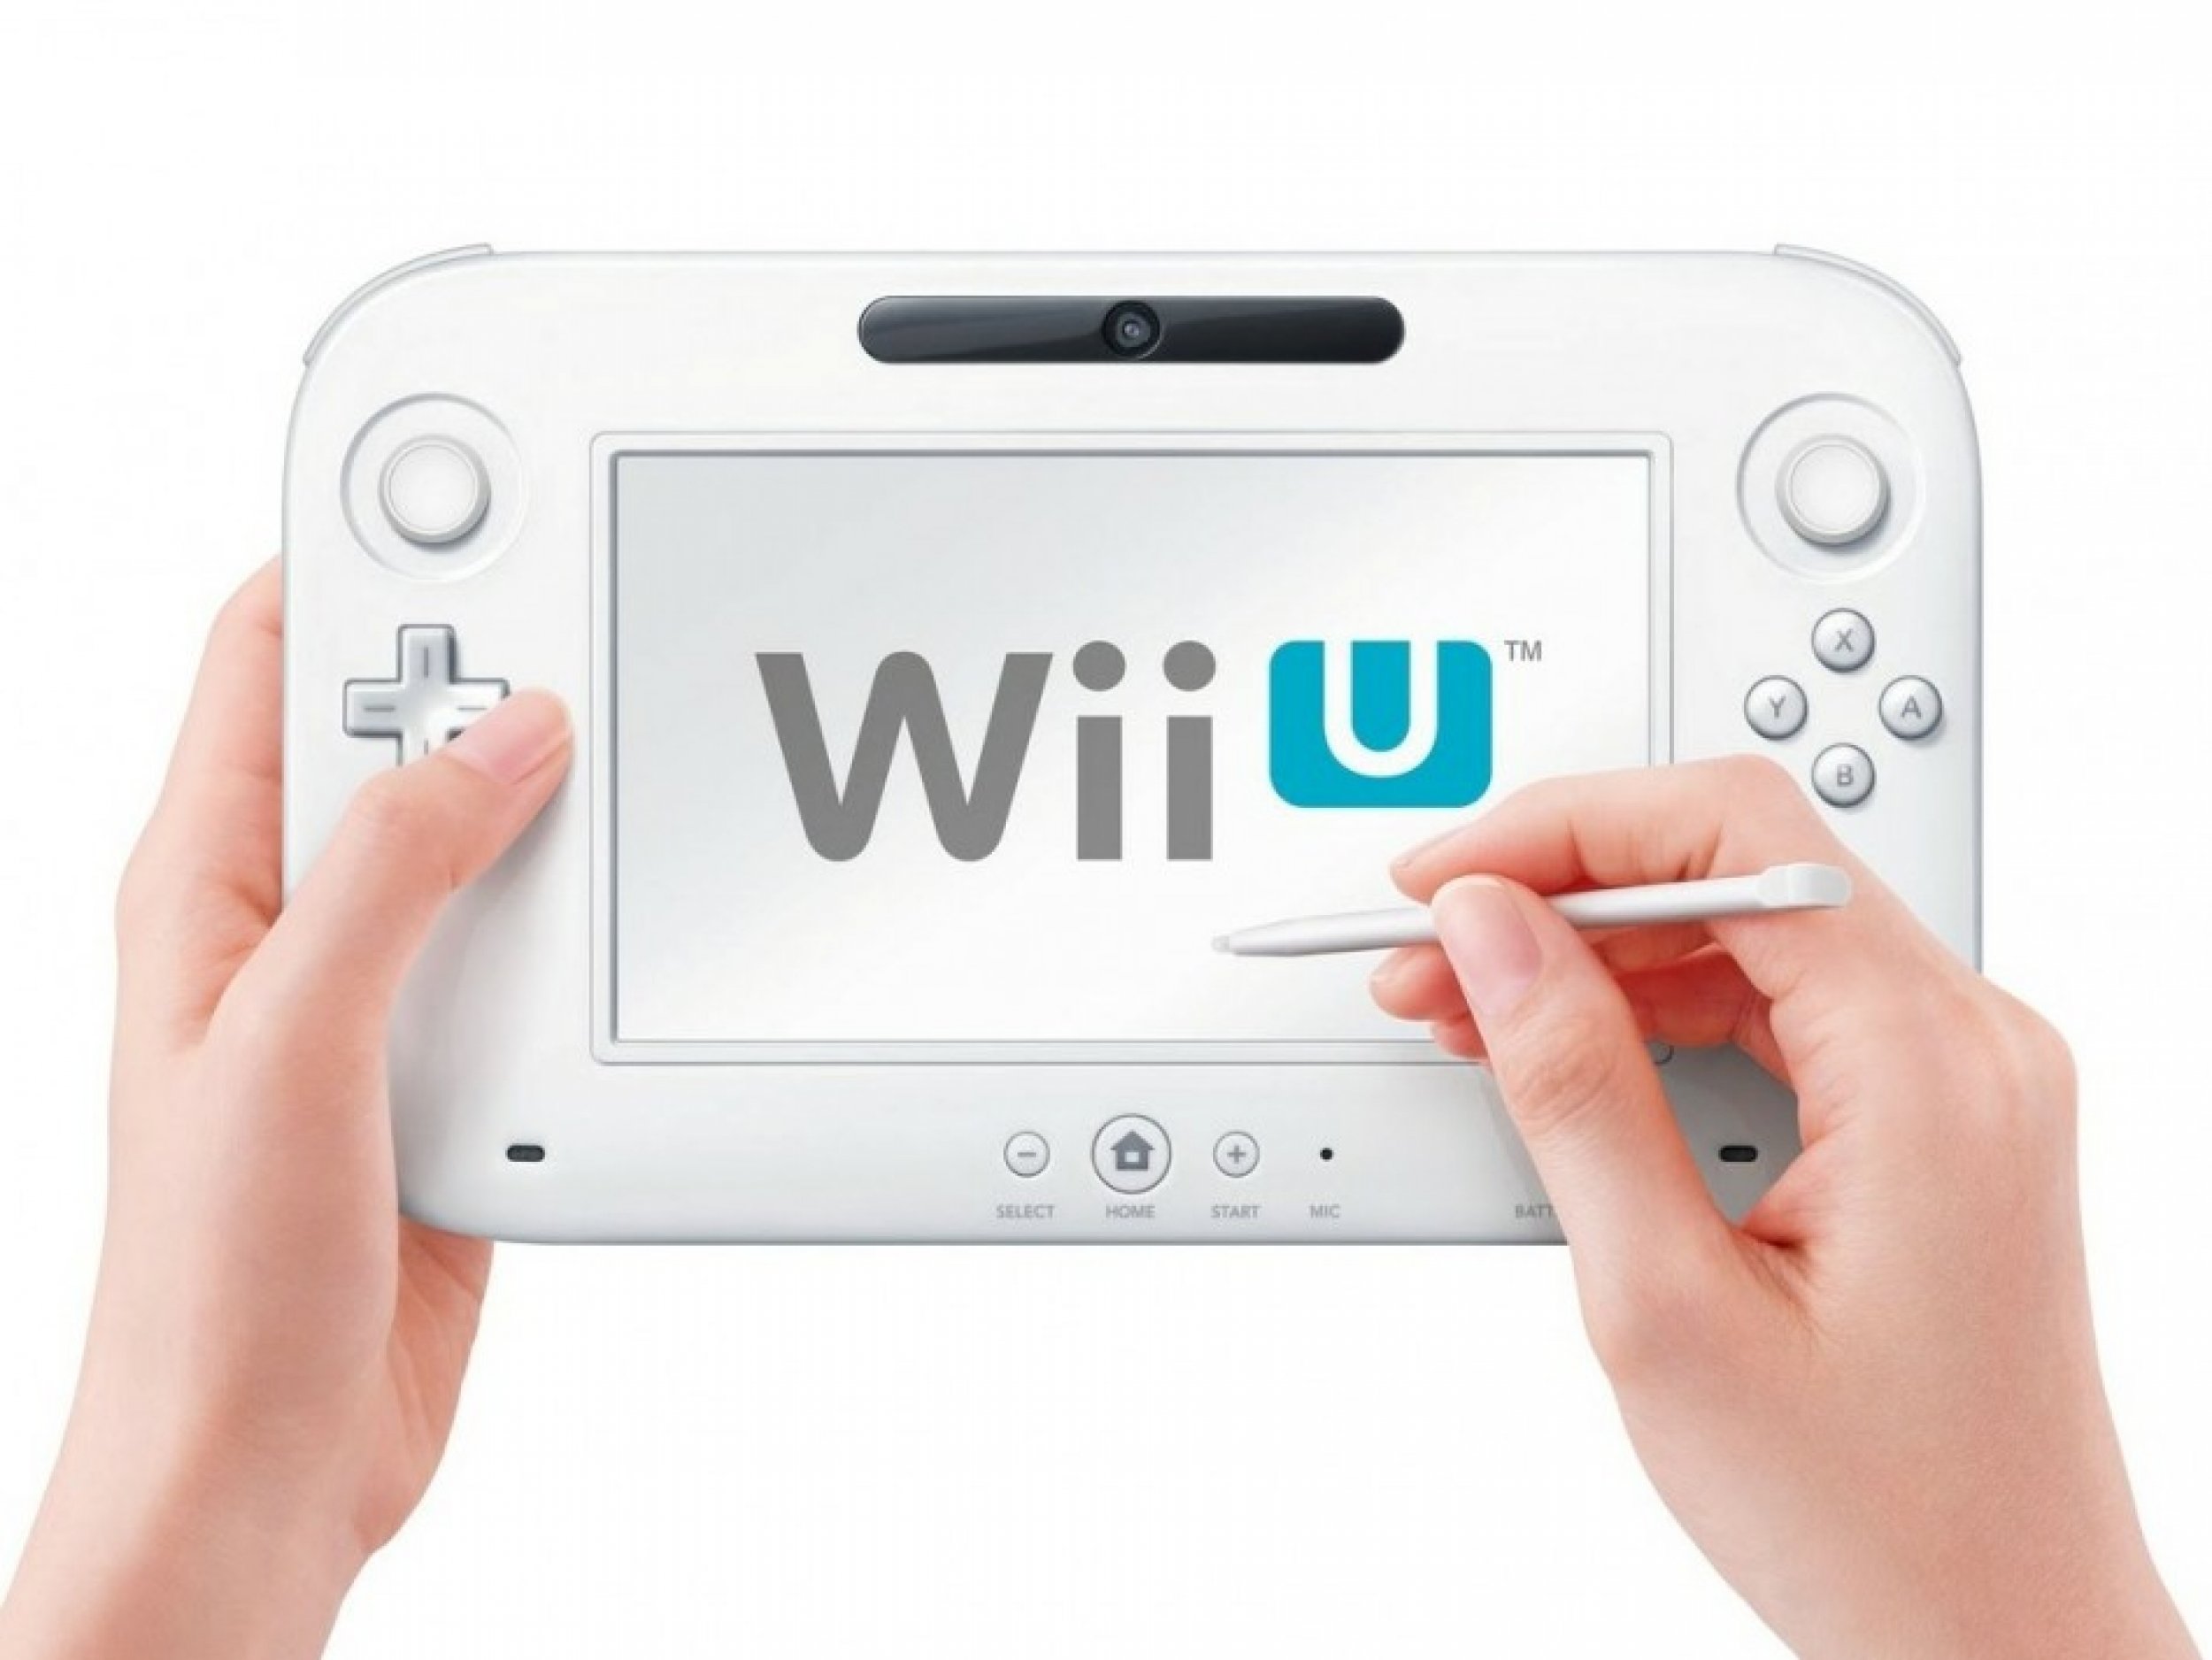 E3 2012: Wii U GamePad revealed by Nintendo, Wii U